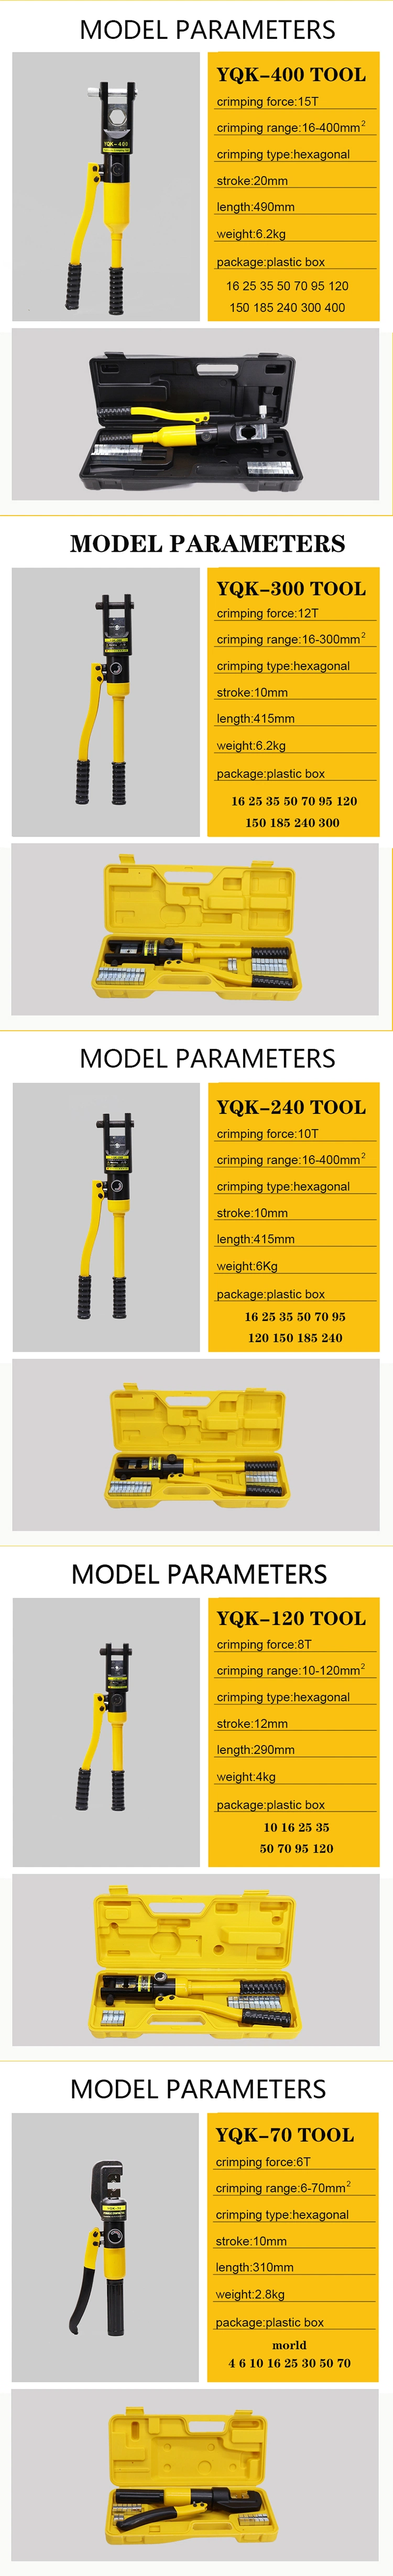 Yqk-300 Manual Hydraulic Hose Crimping Tools